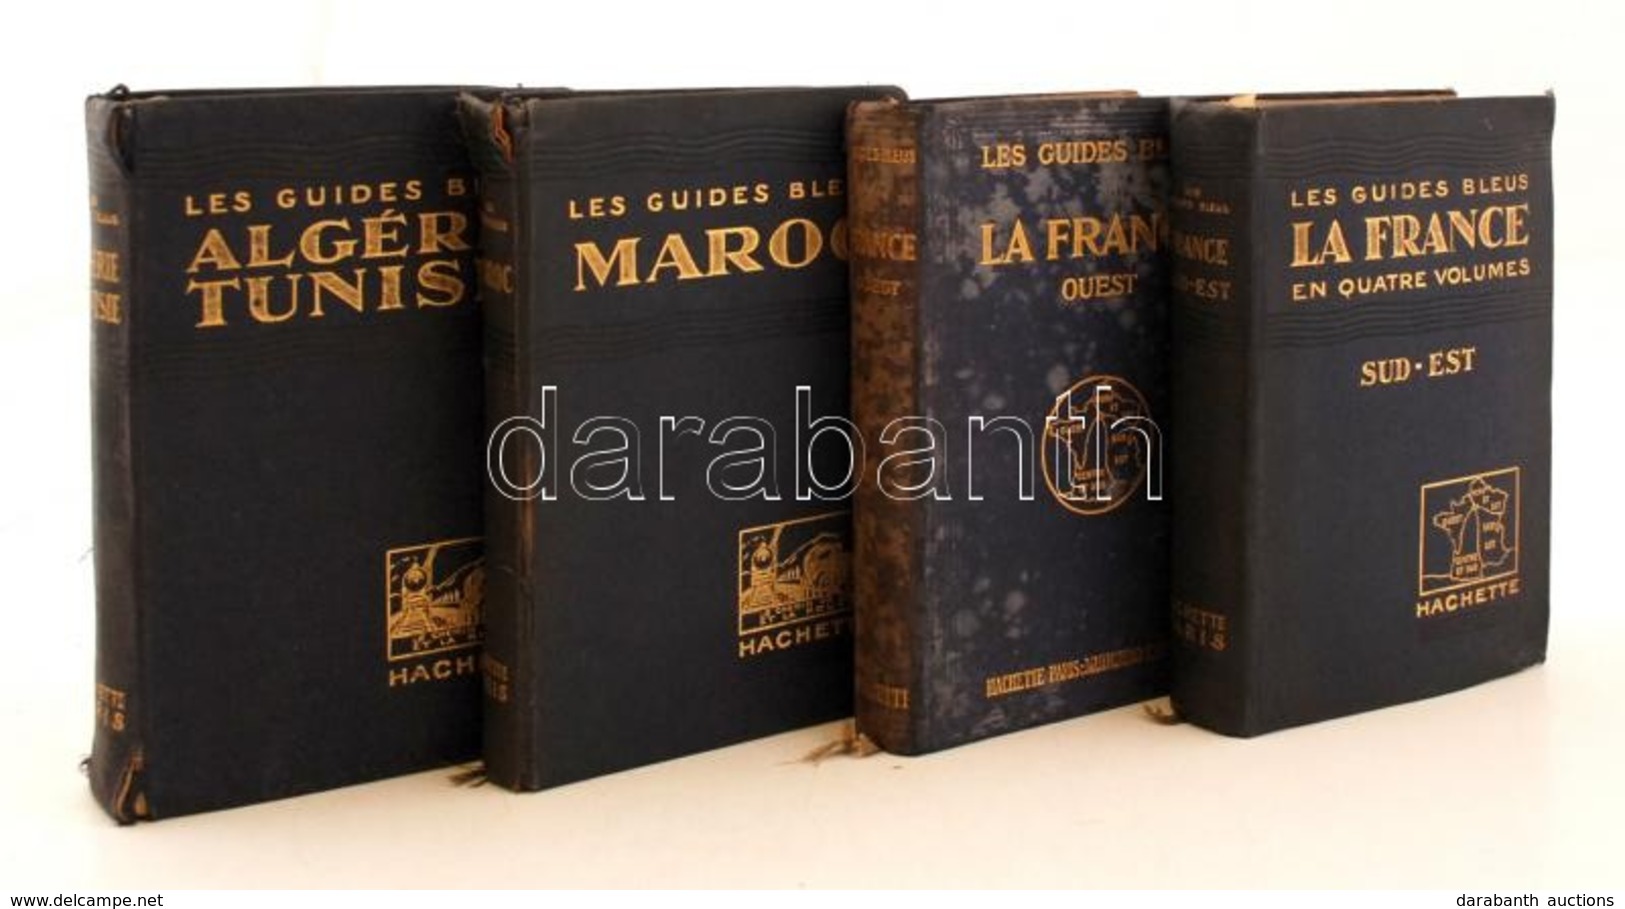 Les Guides Blues Francia Nyelvű útikönyv Sorozat 4 Kötete. (La France - Sud-est, La France - Quest, Maroc, Algérie-Tunis - Ohne Zuordnung